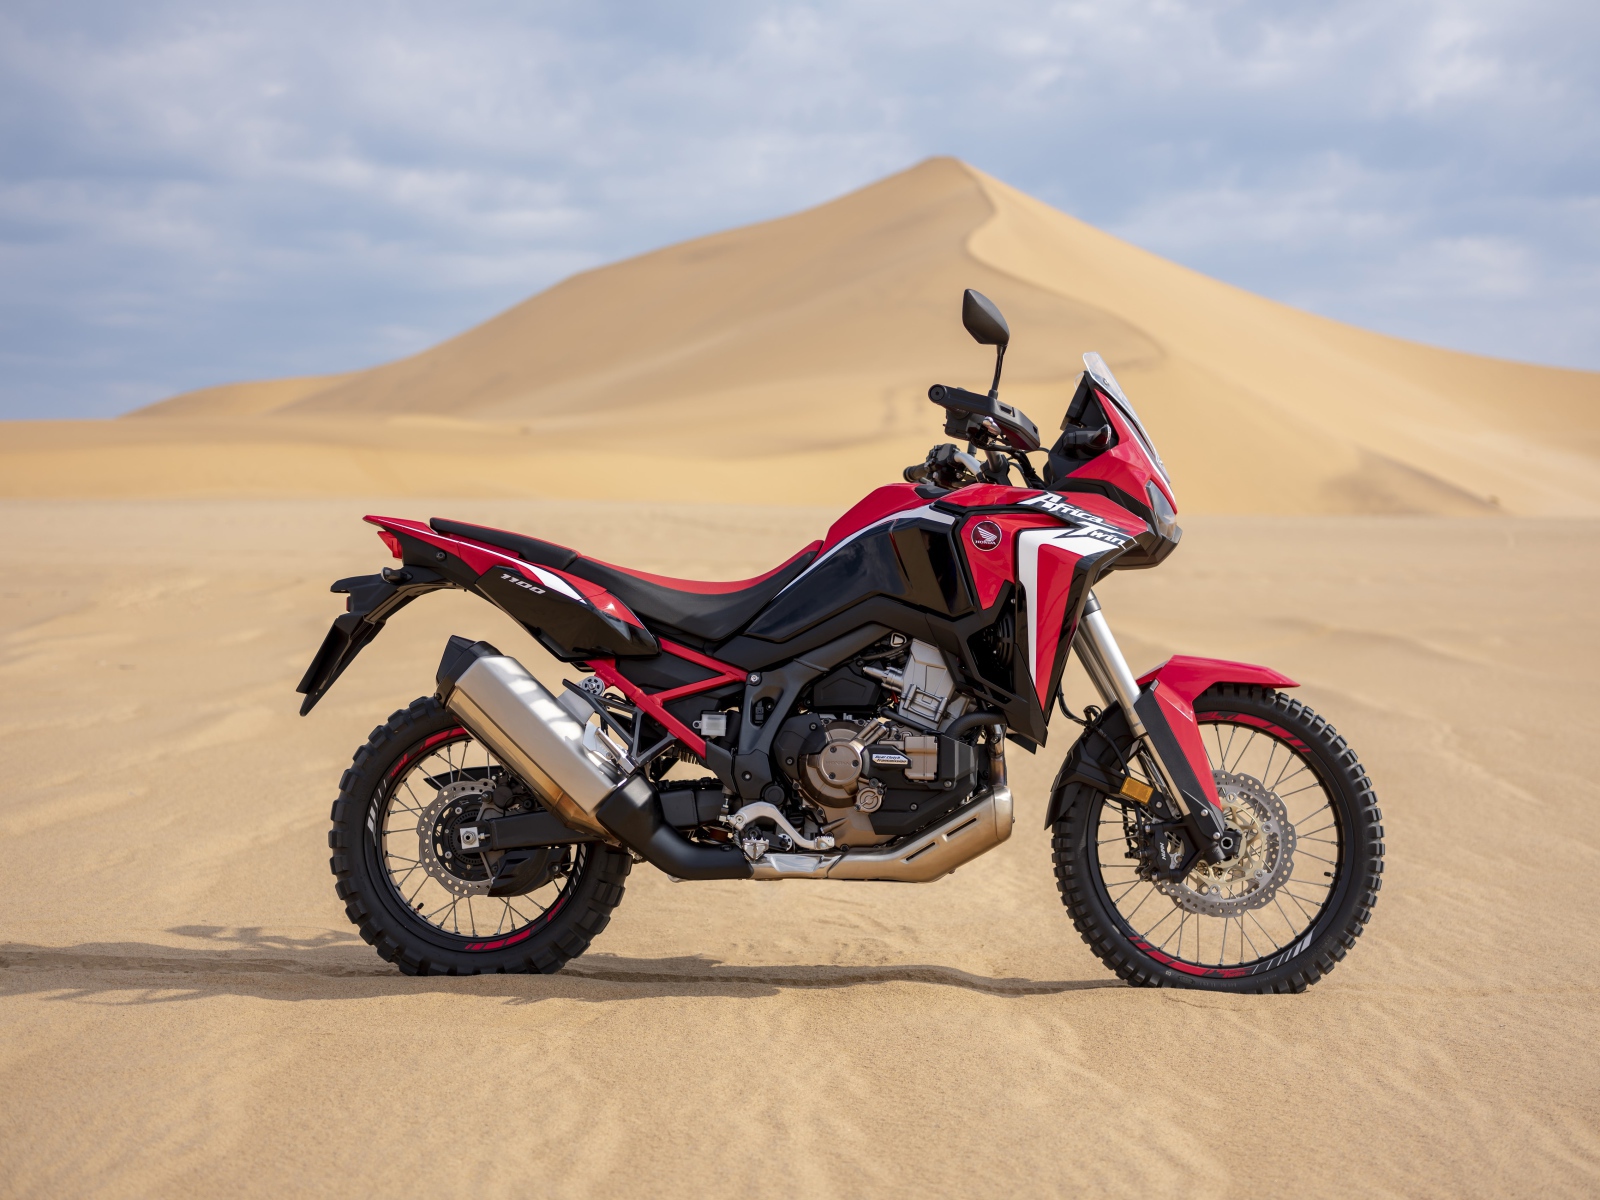 2020 Honda CRF1100L Africa Twin motorcycle in desert